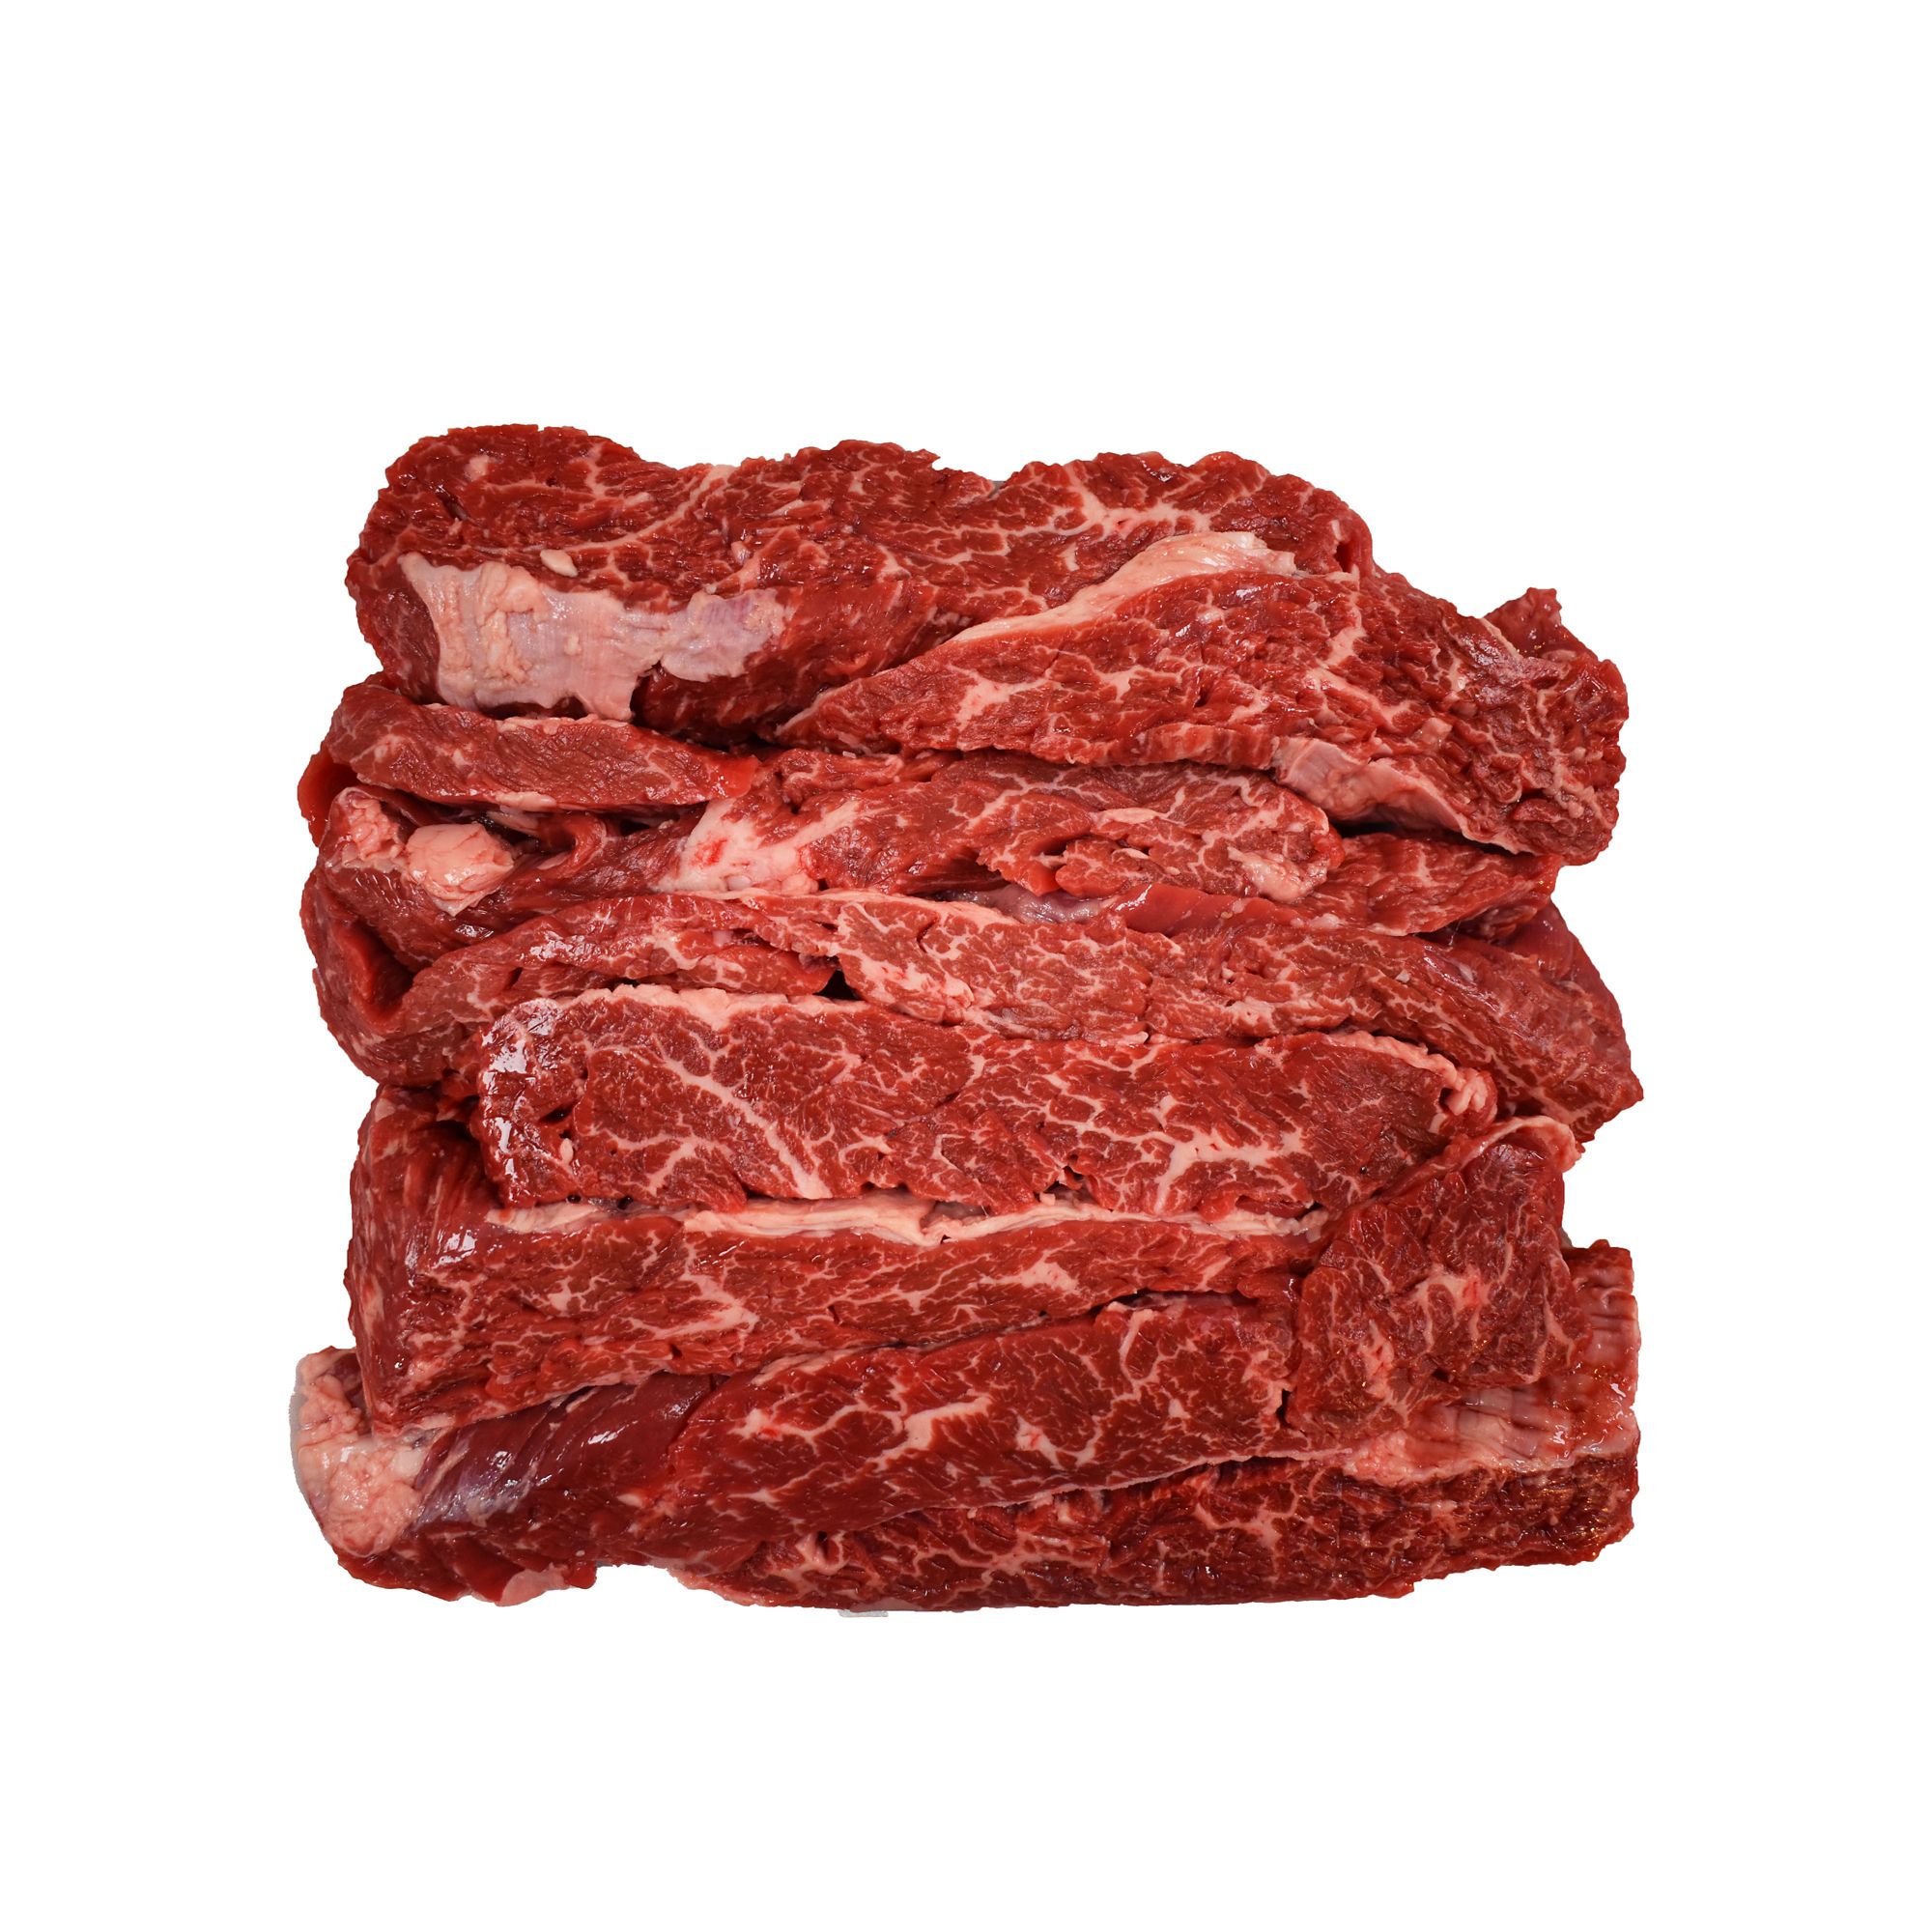 USDA Choice Flanken Style Beef Chuck Short Ribs, 2.75-3.5 lbs 